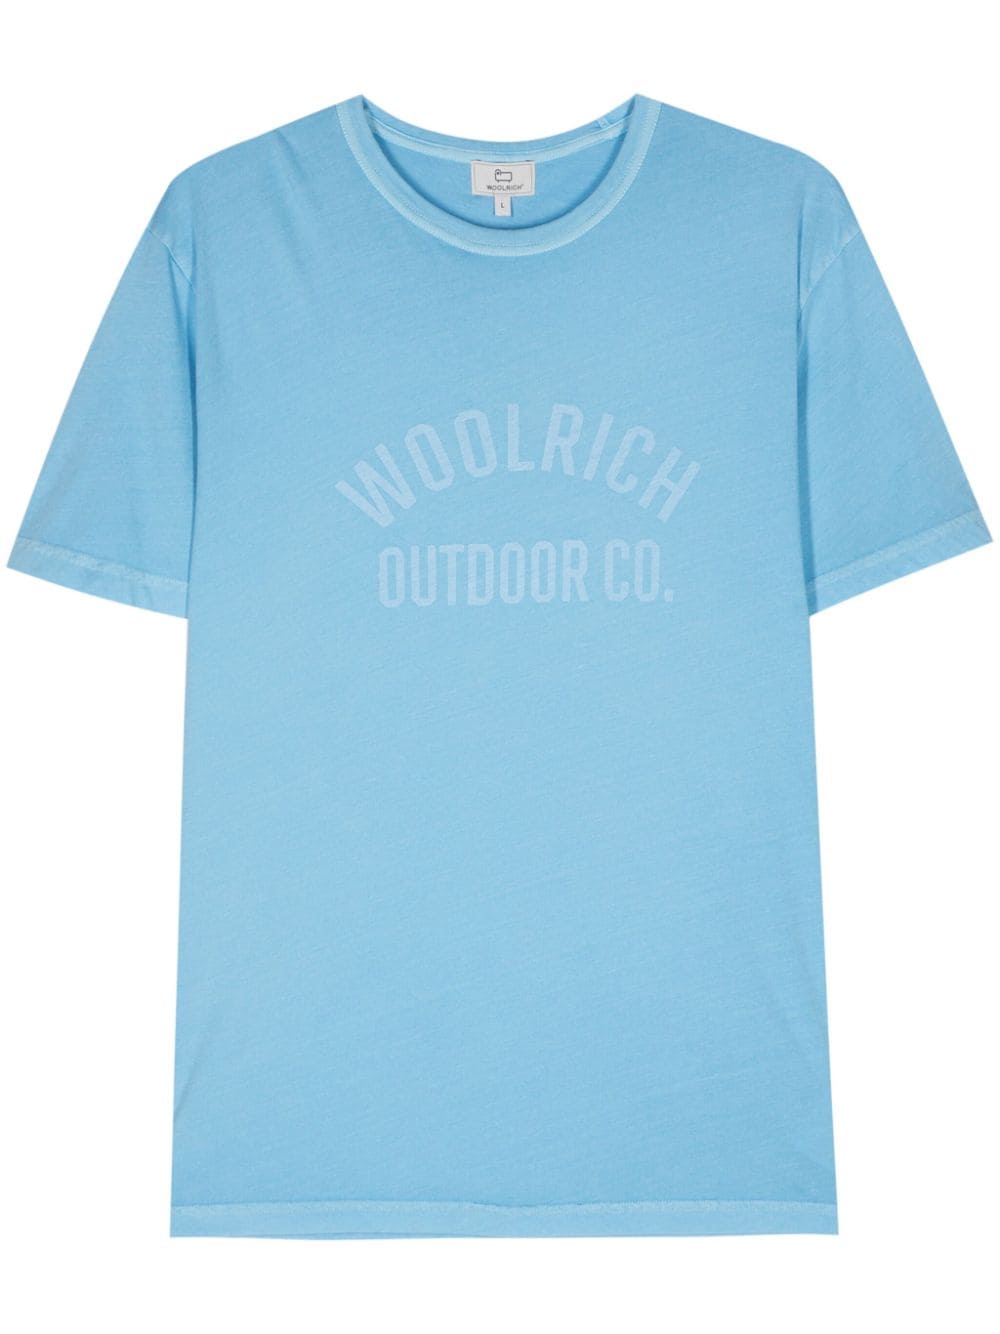 Woolrich WOOLRICH- Cotton T-shirt With Logo